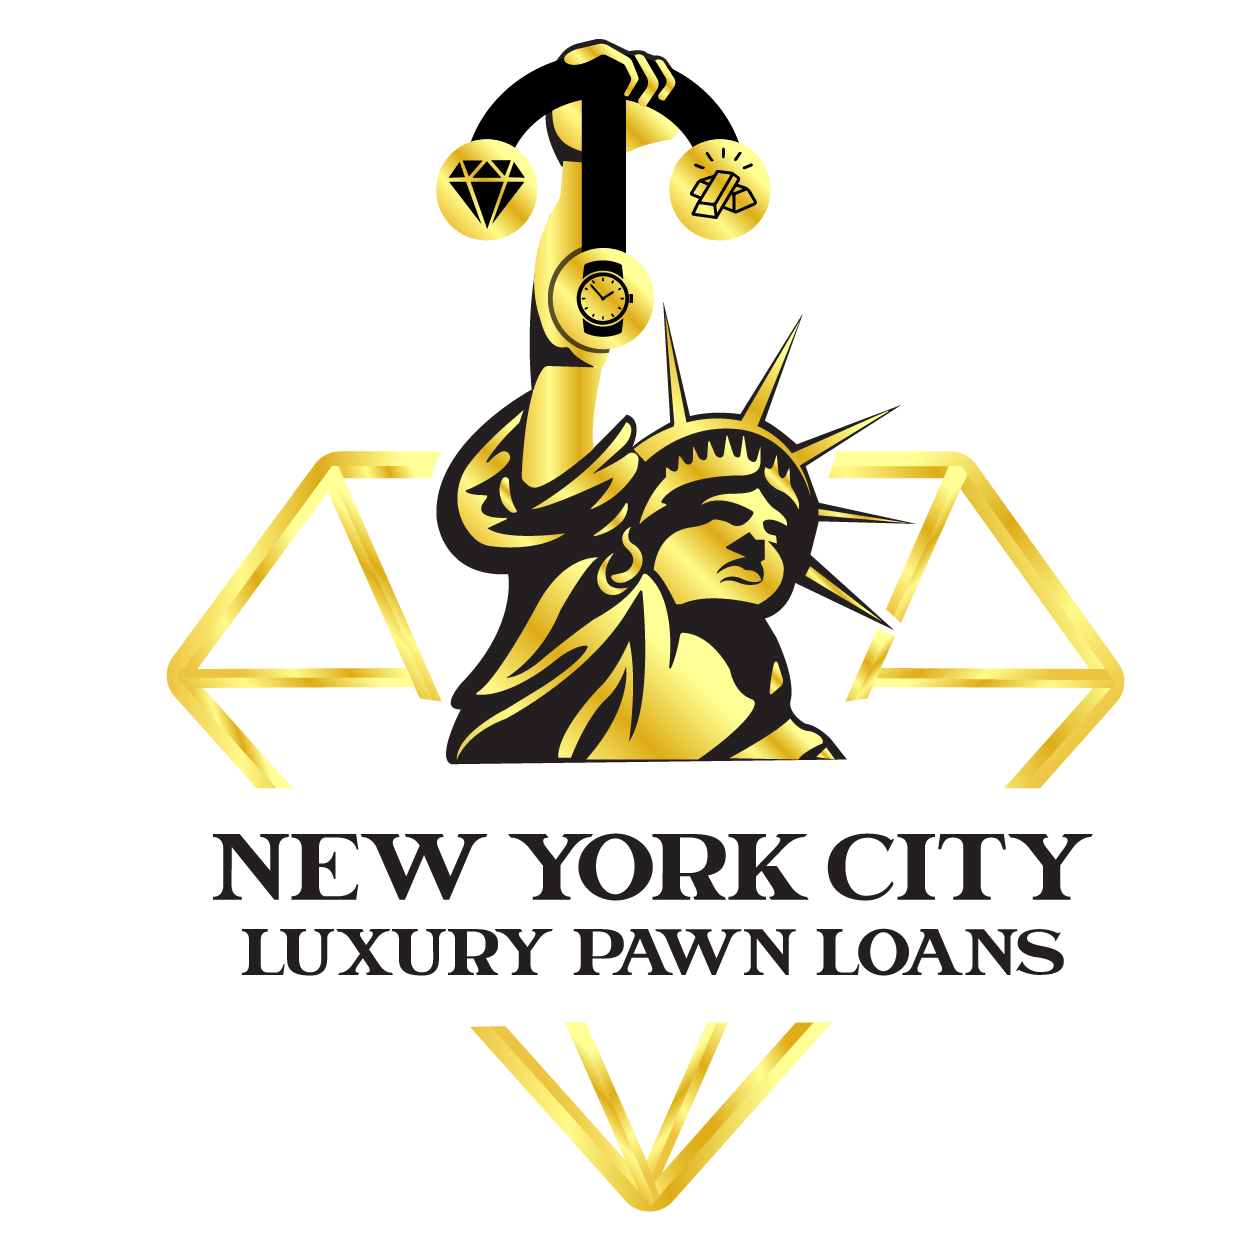 New York City Luxury Pawn Loans